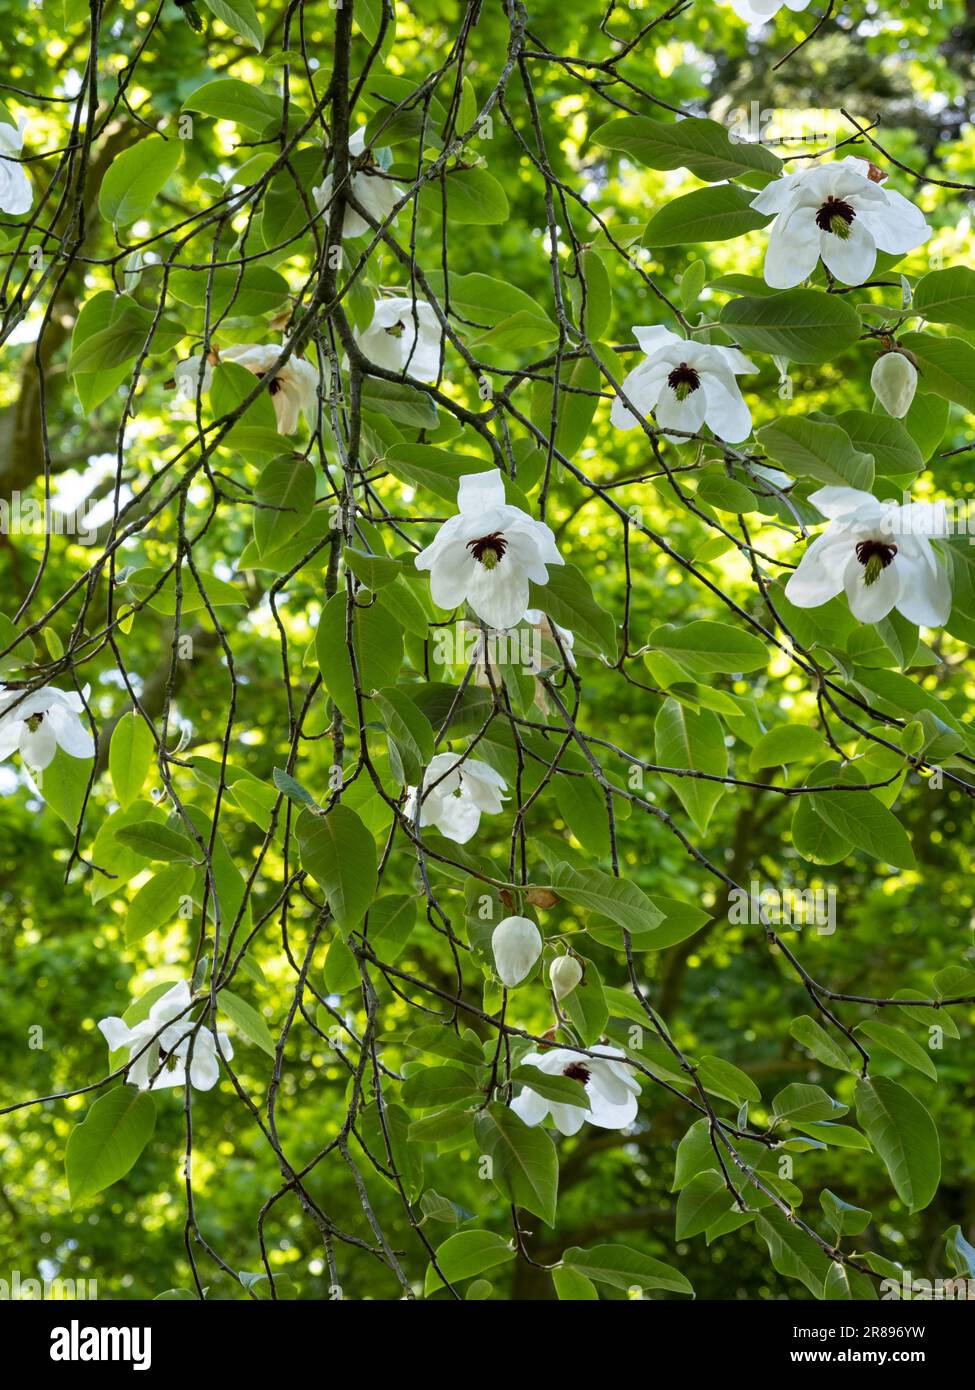 Magnolia Wilsonii tree in flower Stock Photo